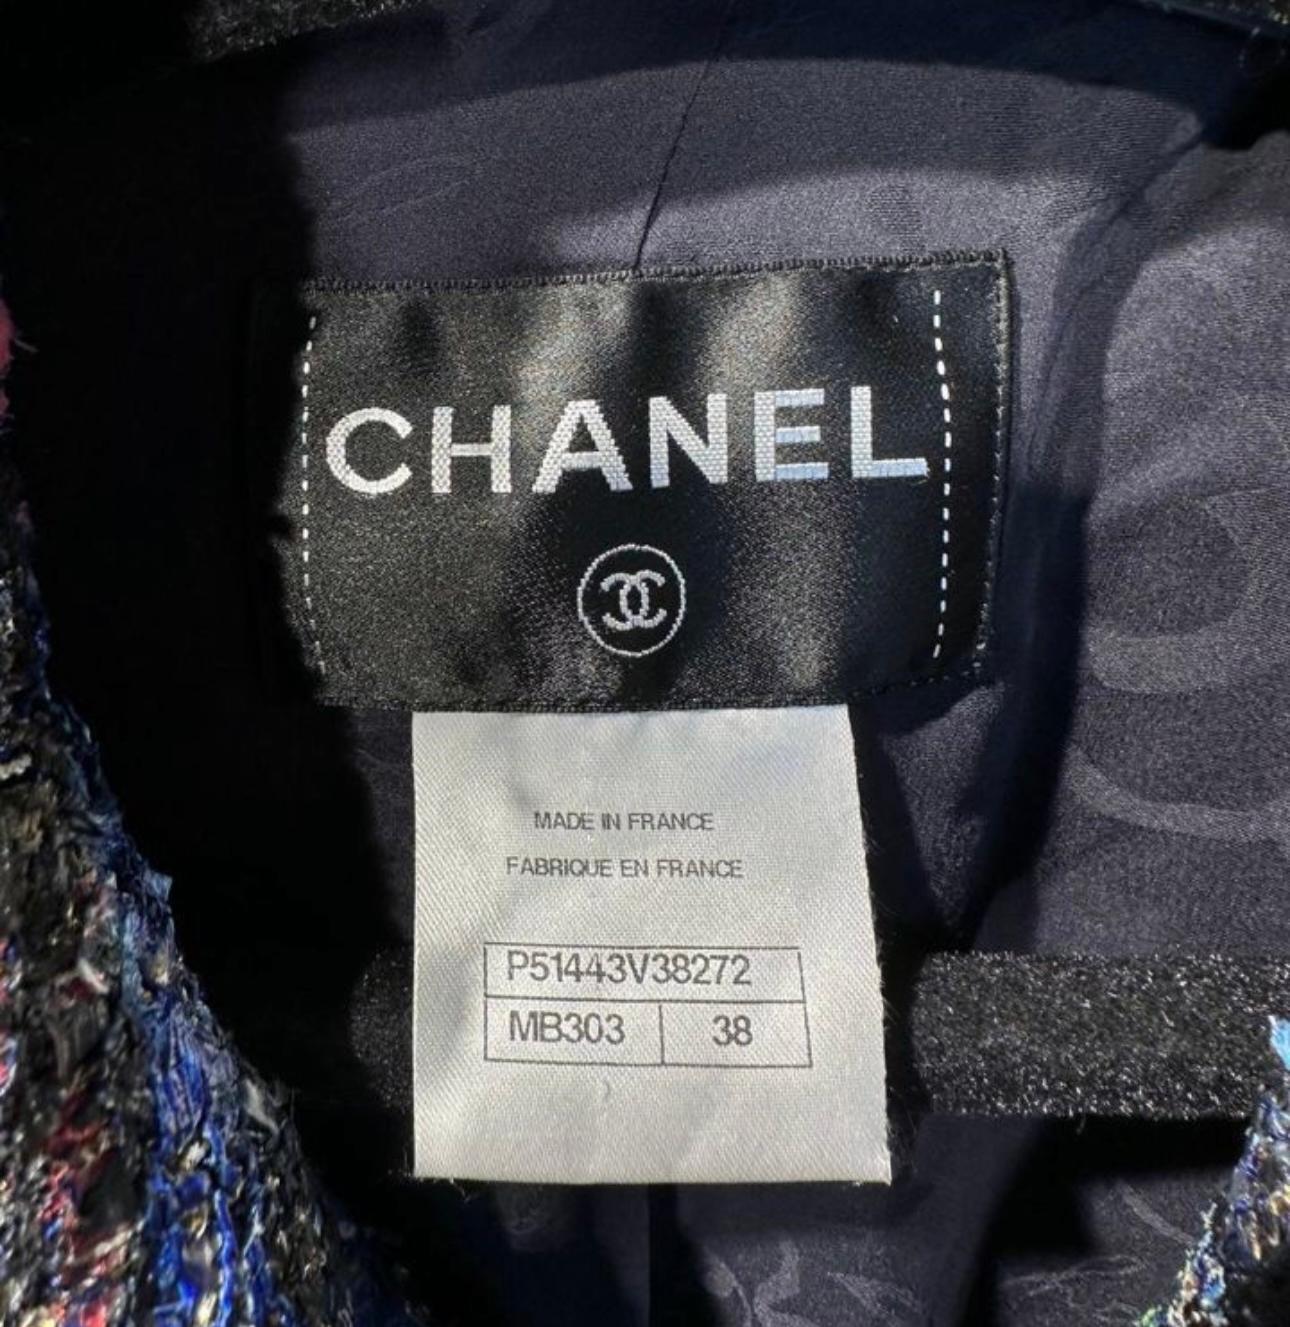 Chanel Supermodel Nata Vodianova Style Tweed Jacket 9